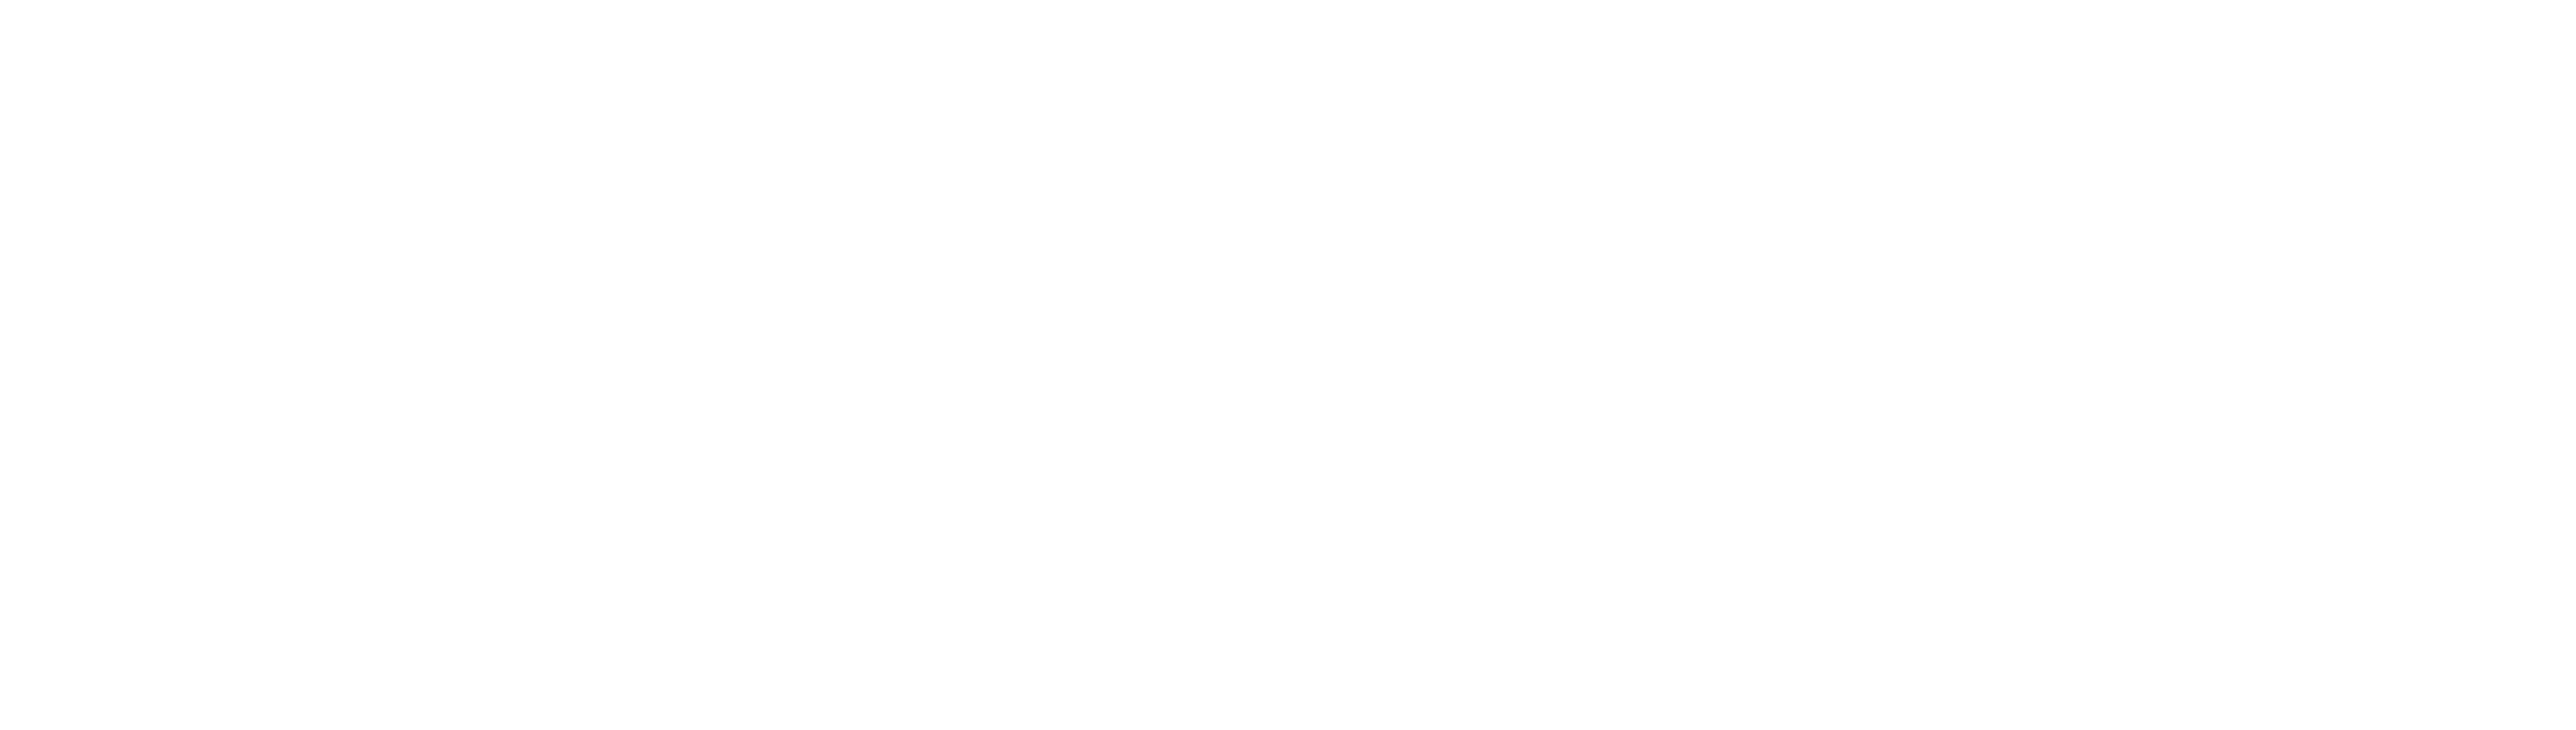 Fibrocem - facade system